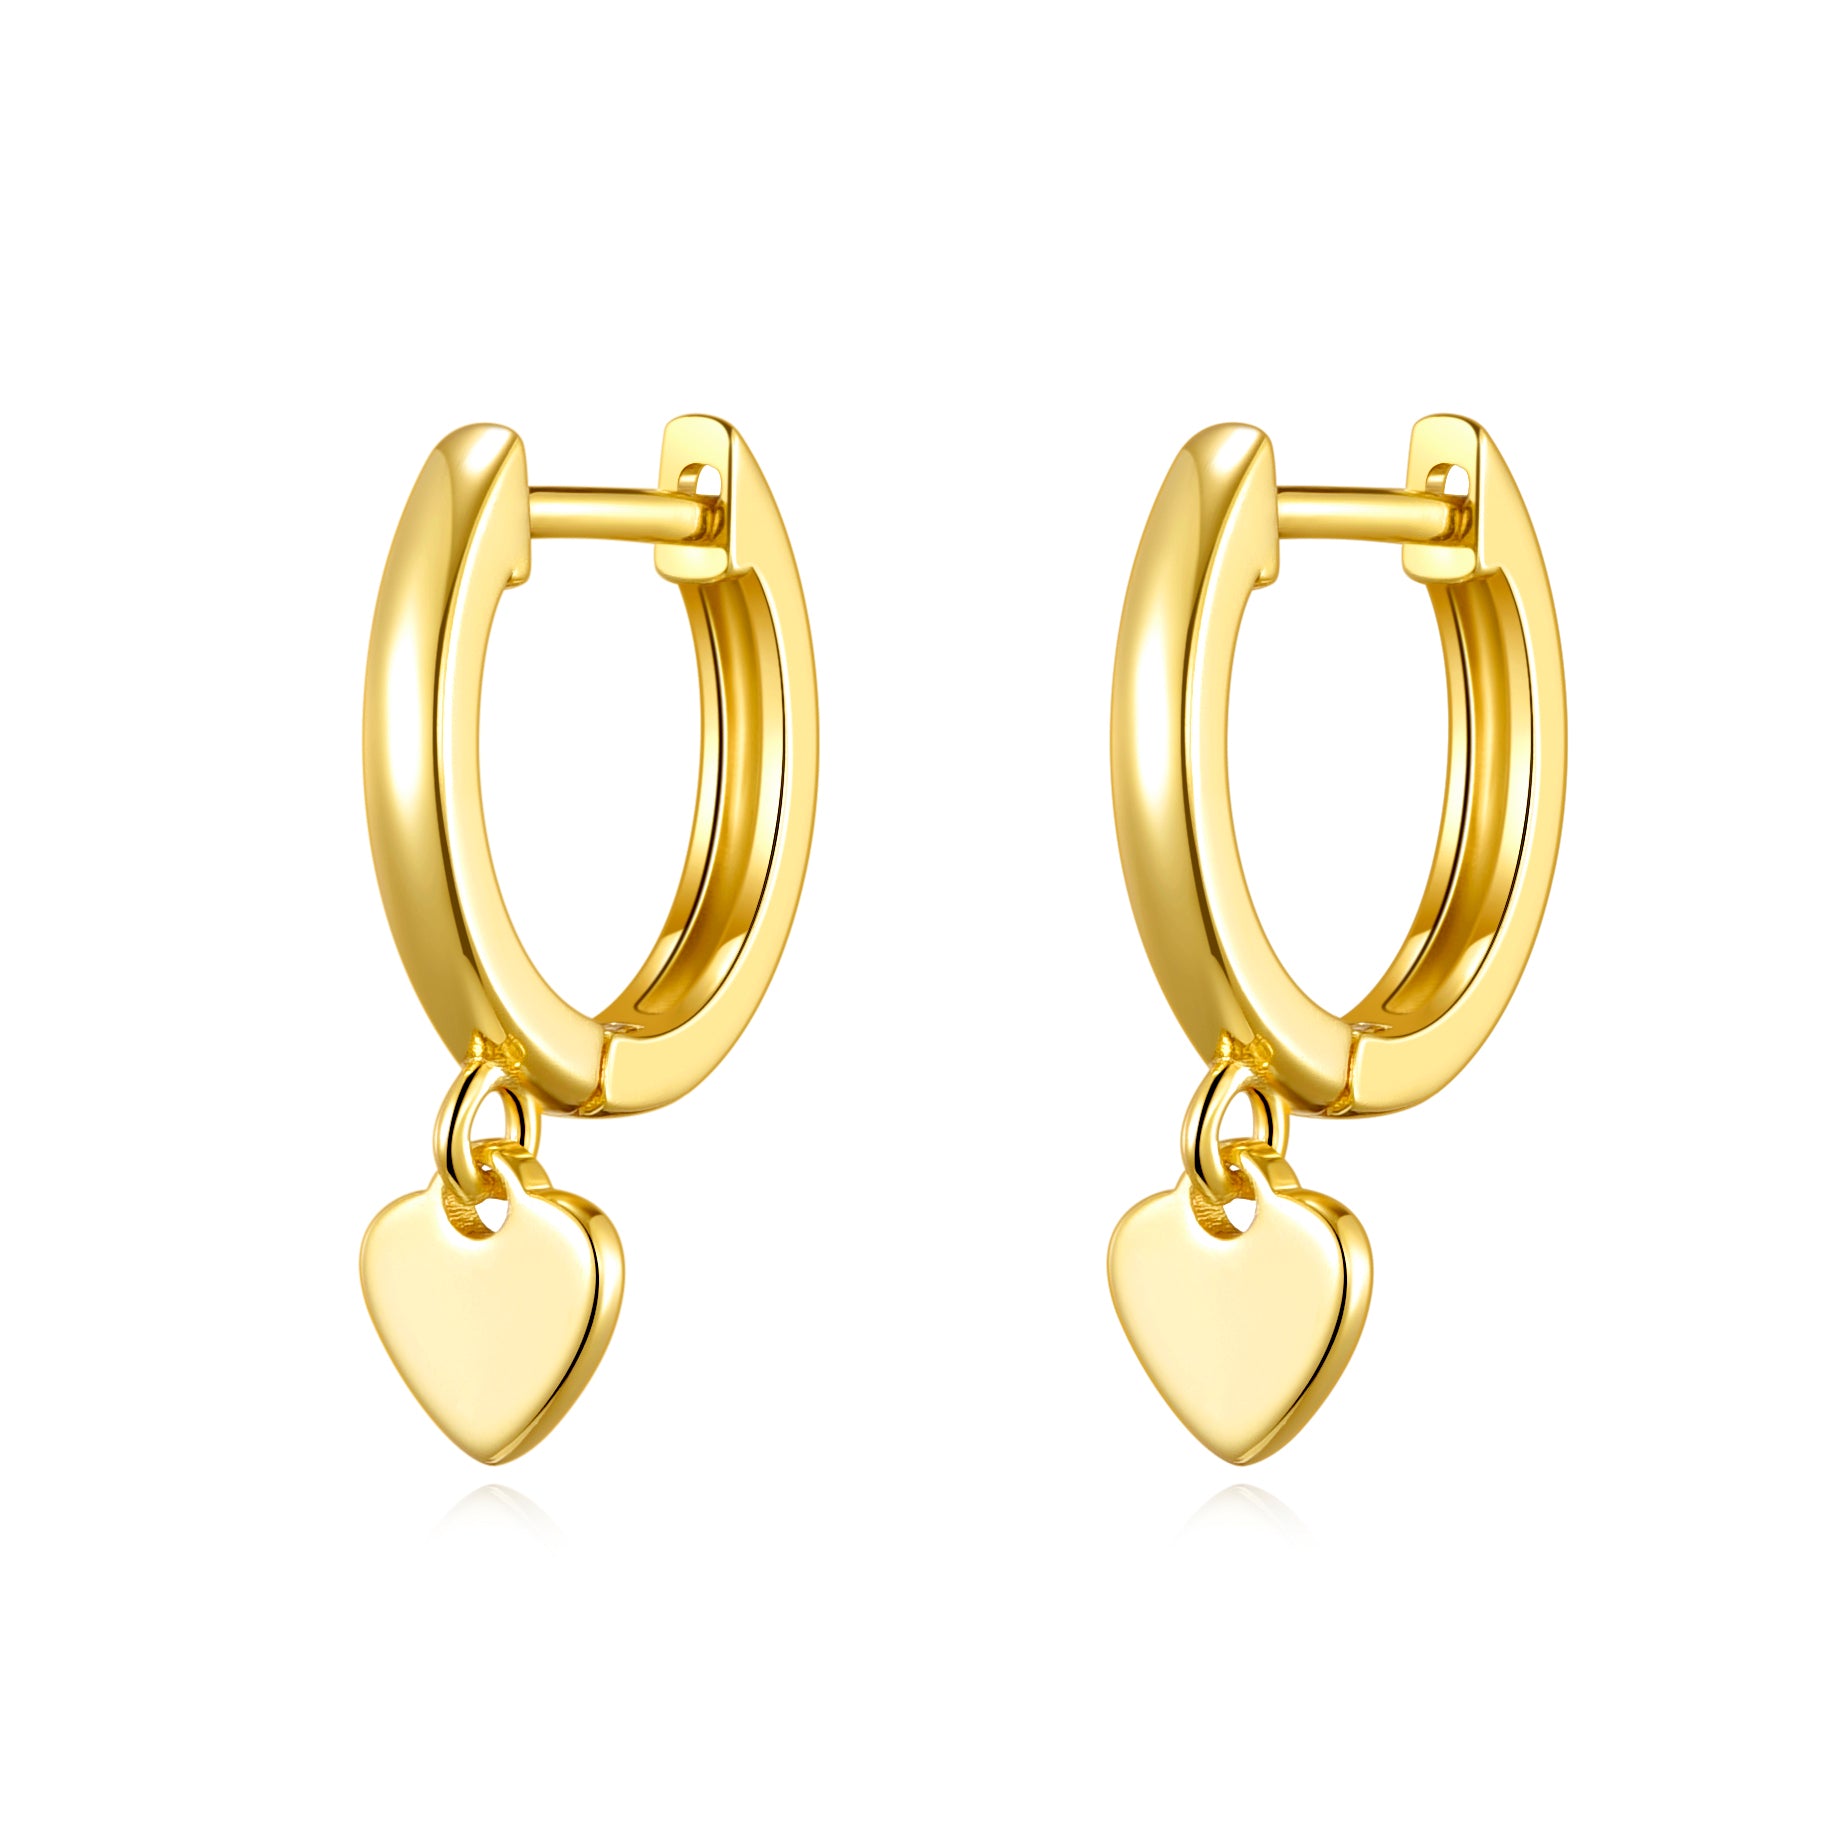 Gold Plated Heart Charm Hoop Earrings by Philip Jones Jewellery